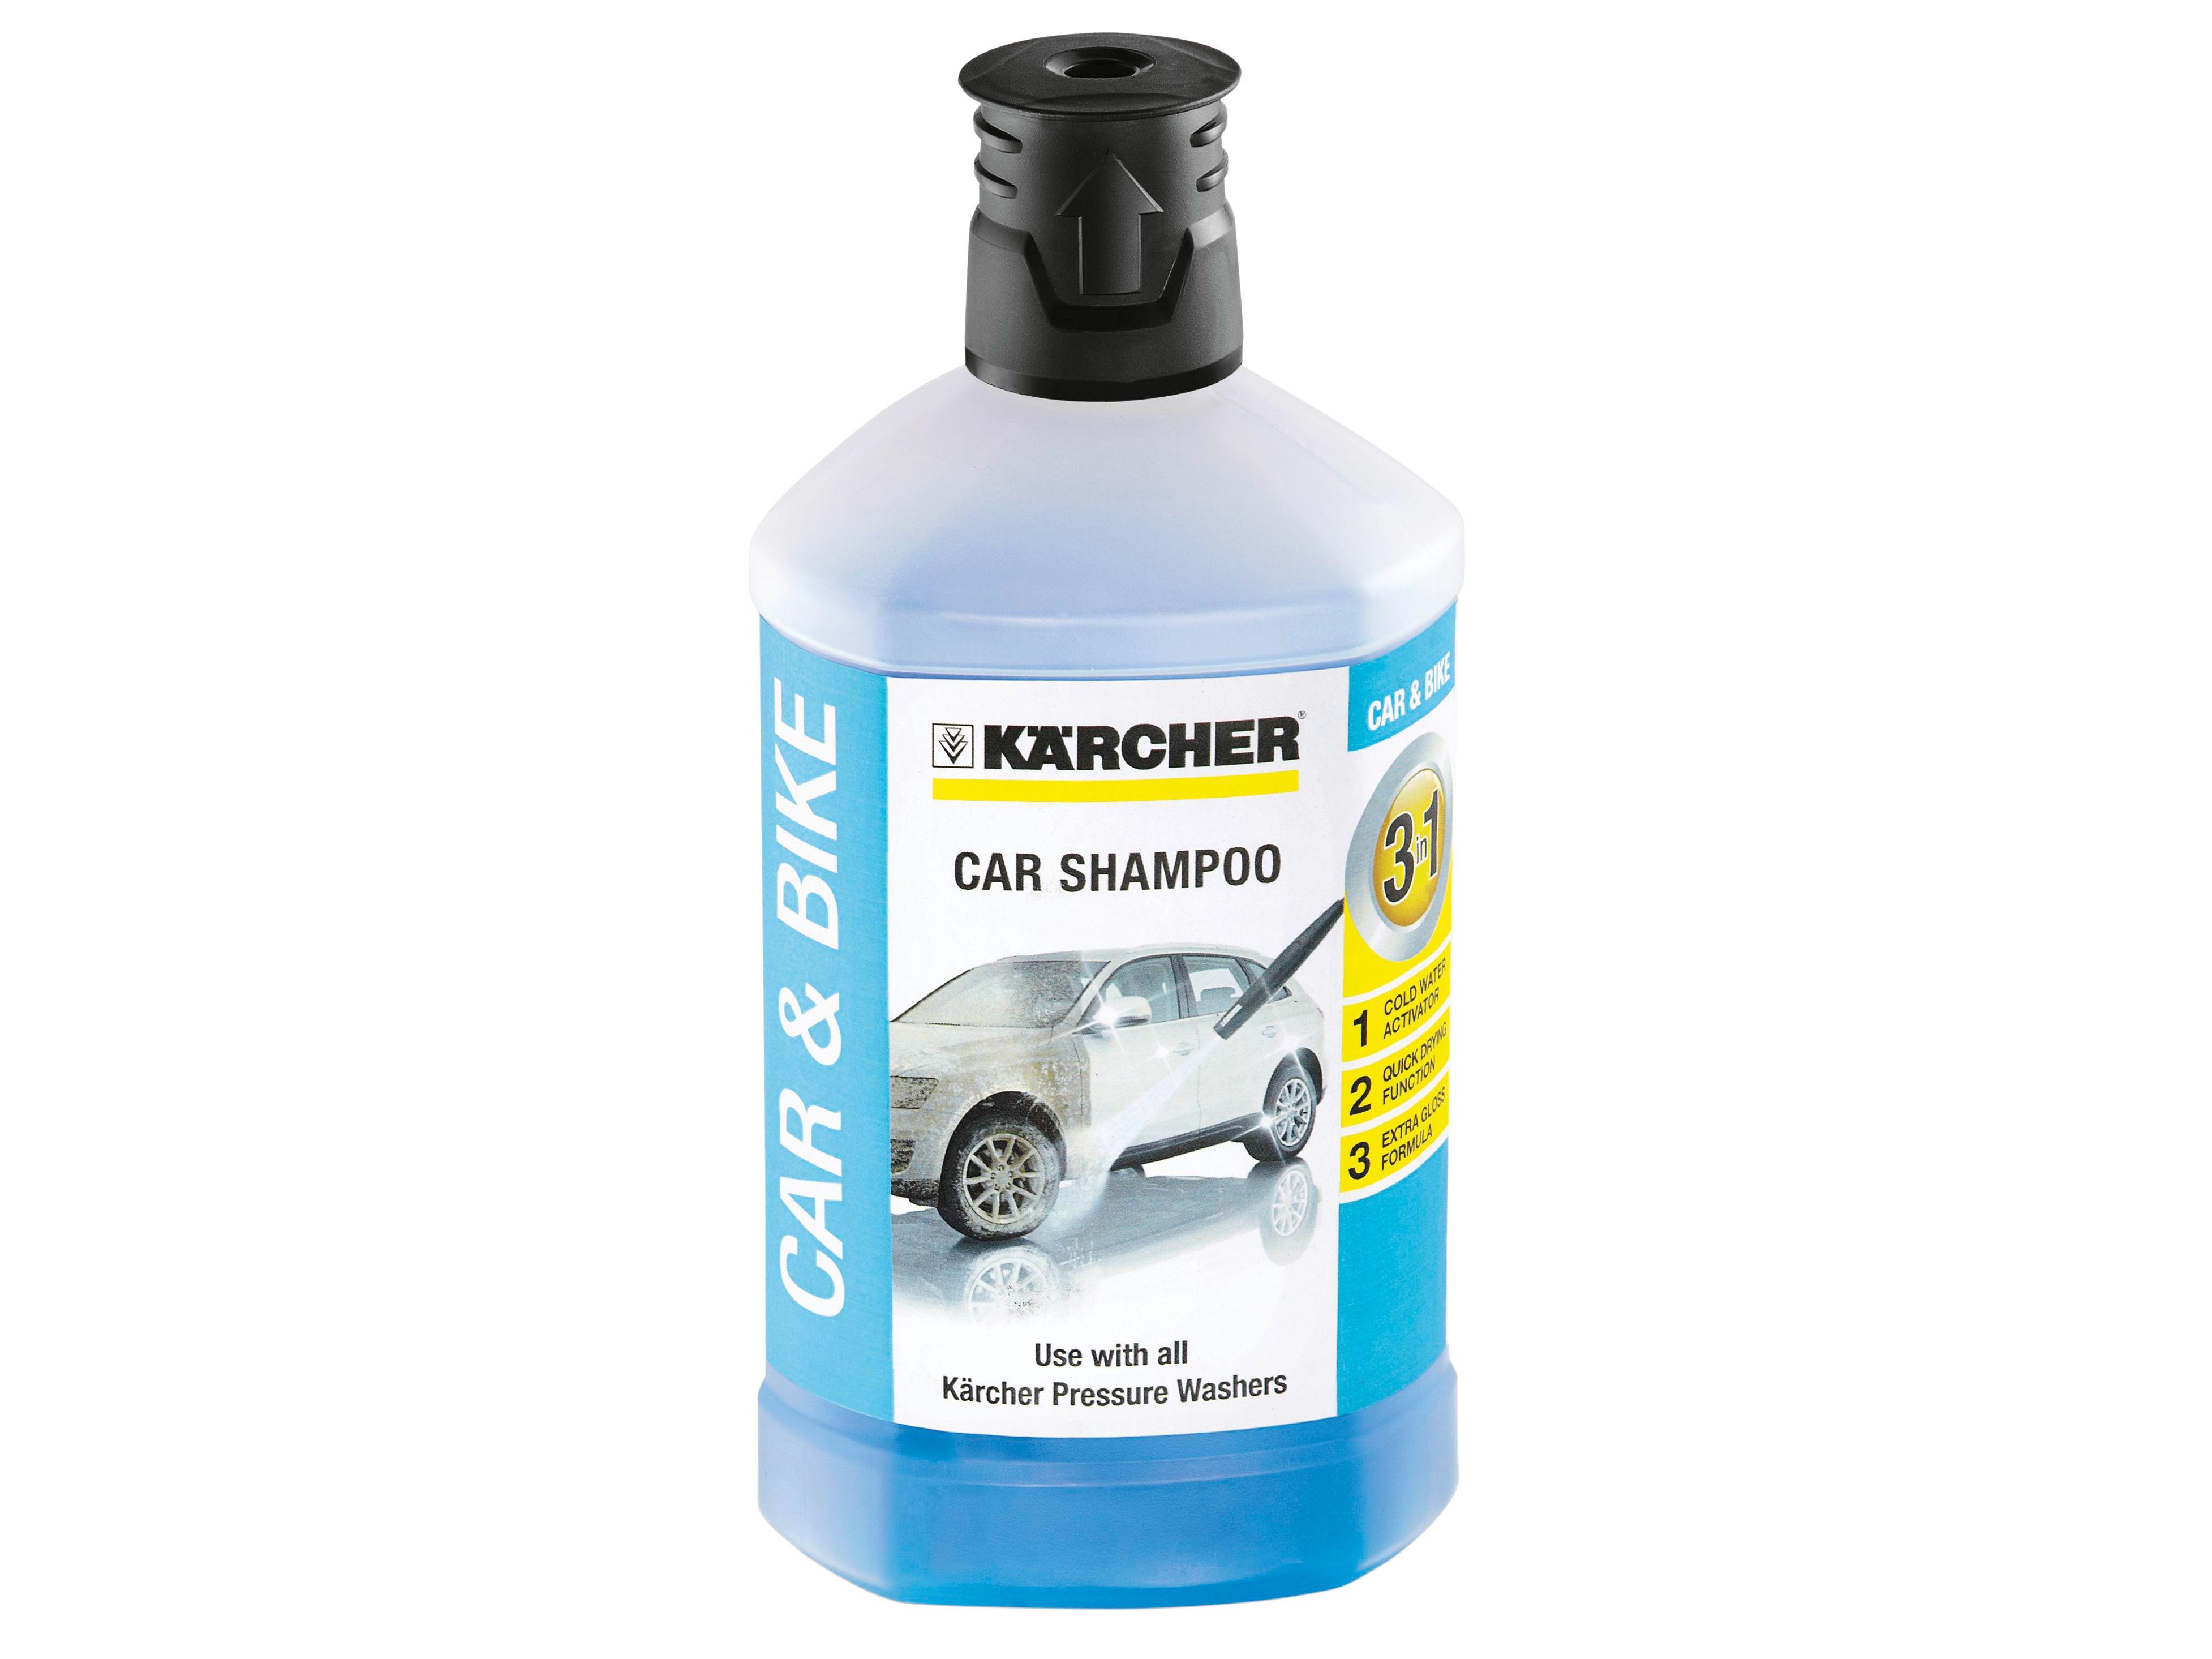 Karcher Car Shampoo for Cars & Bikes - 1L